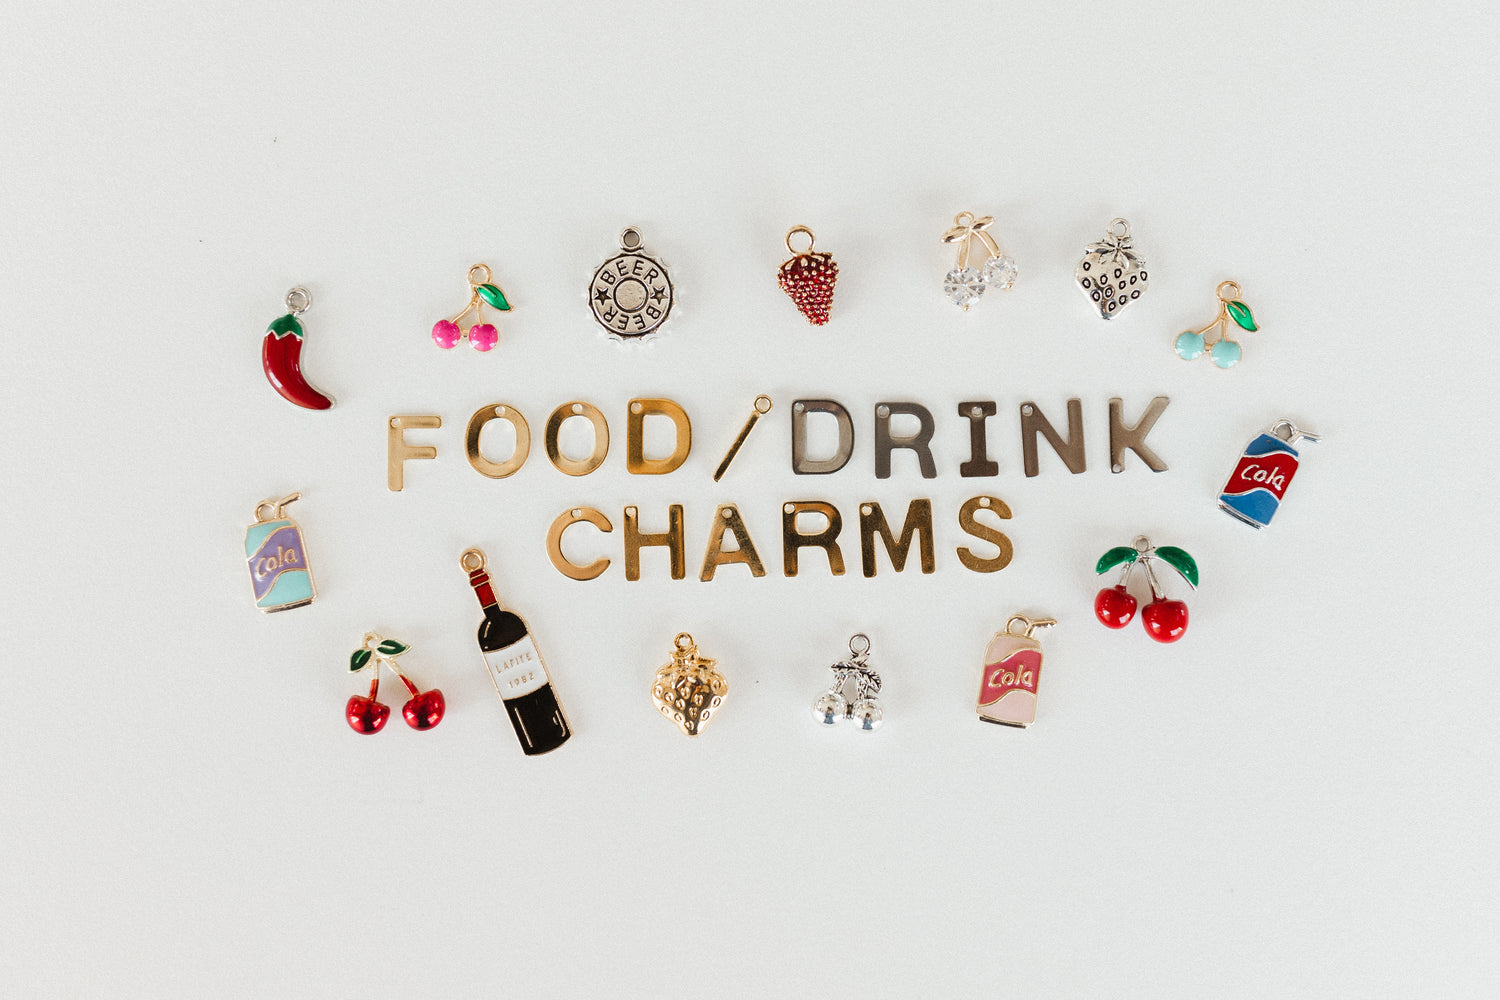 Food & drink charms